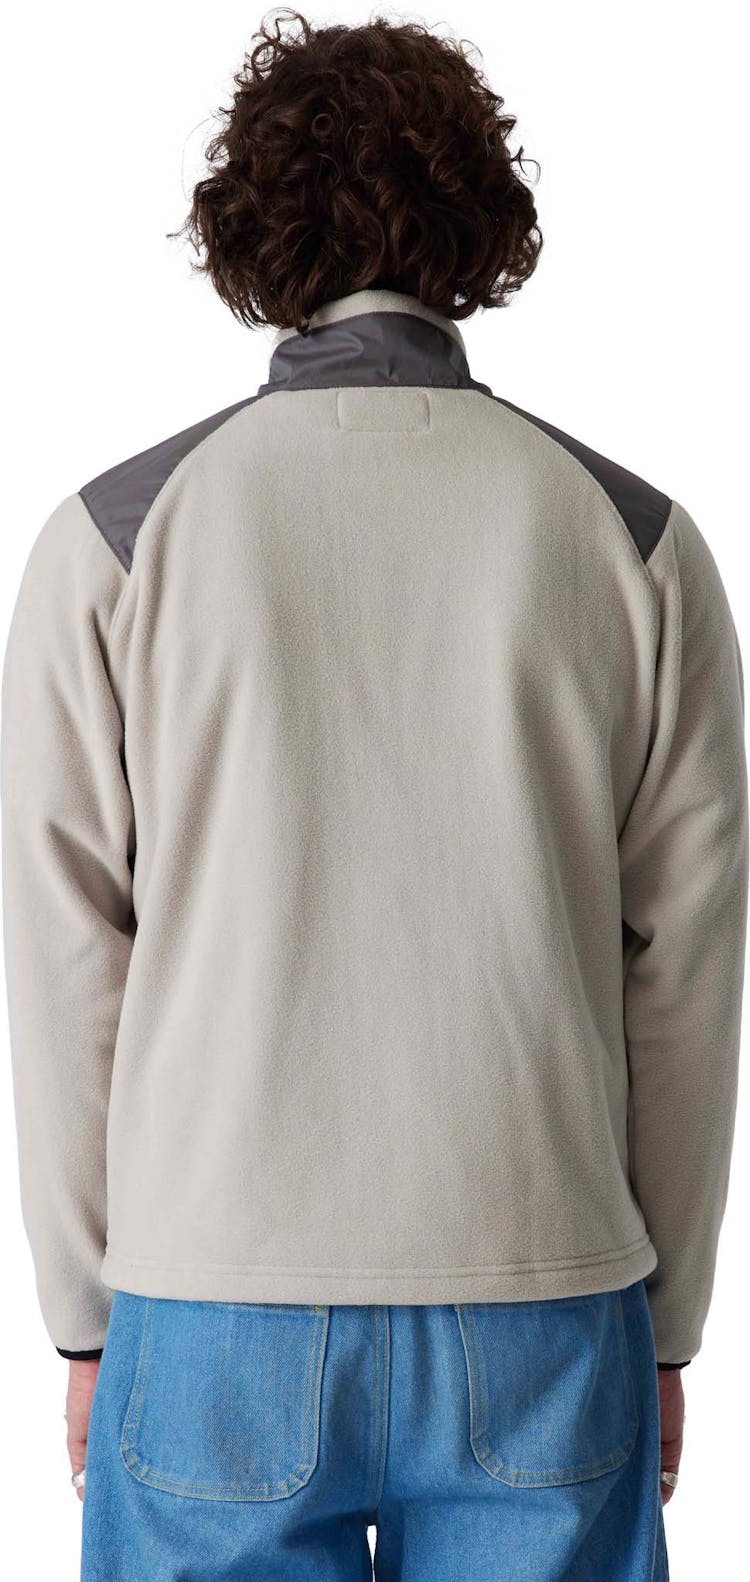 Product gallery image number 5 for product Surplus Fleece Jacket - Men's